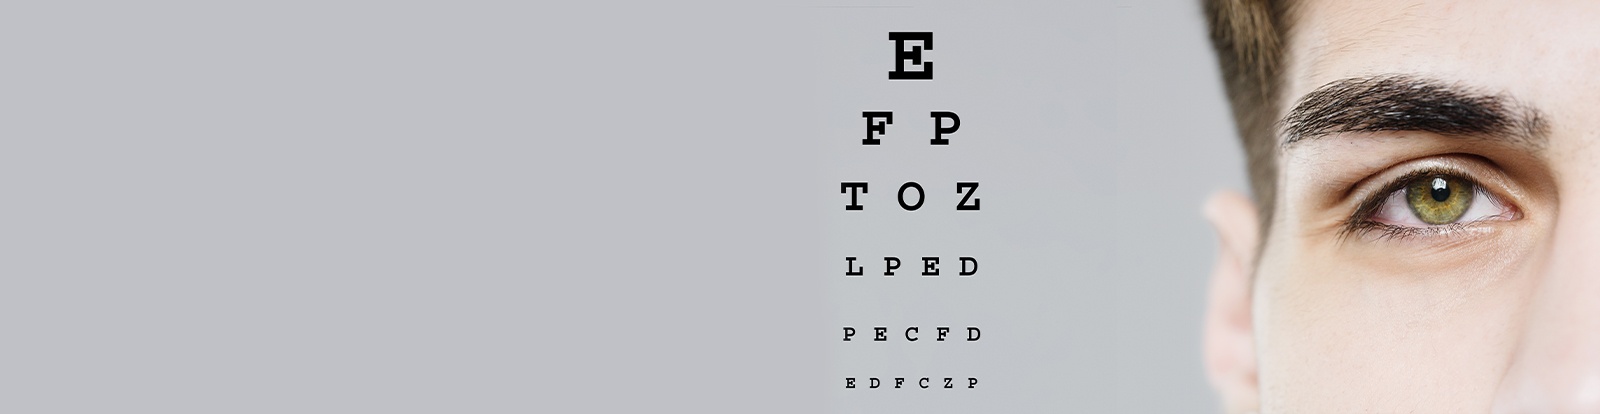 Top Eyewear Brands at Wesbrook Eyecare Optometry - Eye Care Center Vancouver